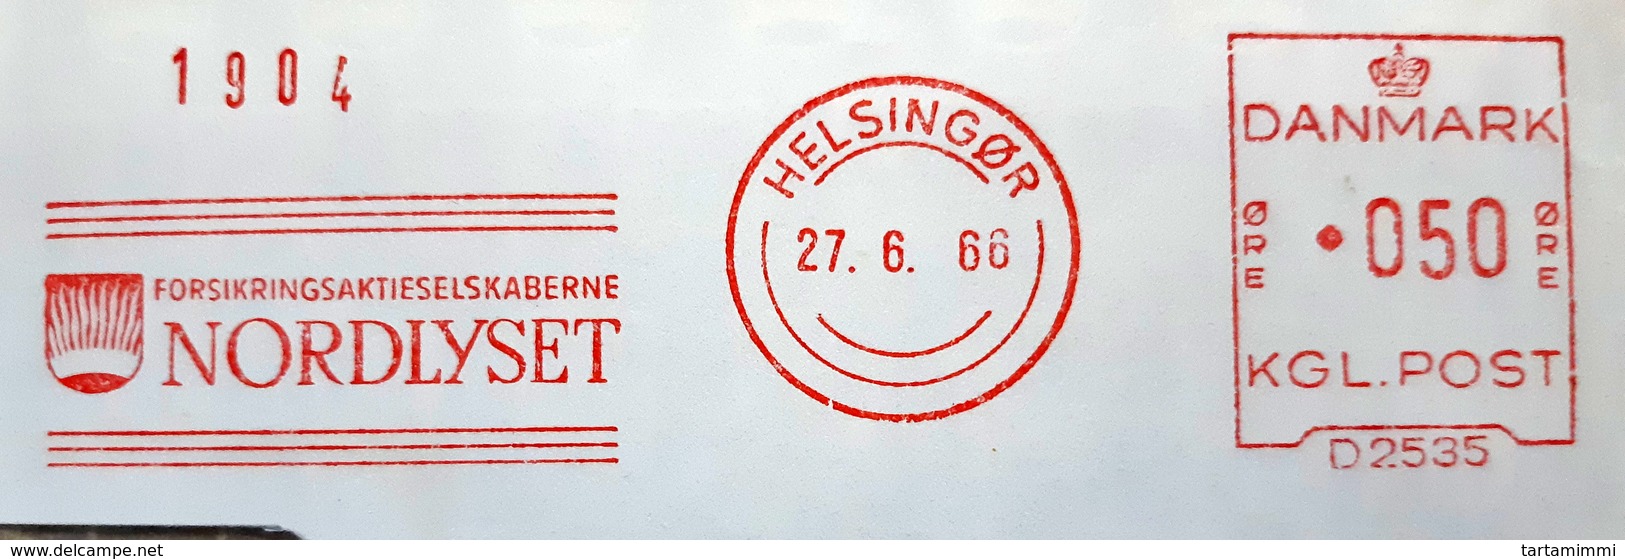 EMA AFS METER STAMP FREISTEMPEL - DANMARK HELSINGØR 1966 NORDLYSET SUNSHINE SUNSET SUN SOLEIL - Máquinas Franqueo (EMA)